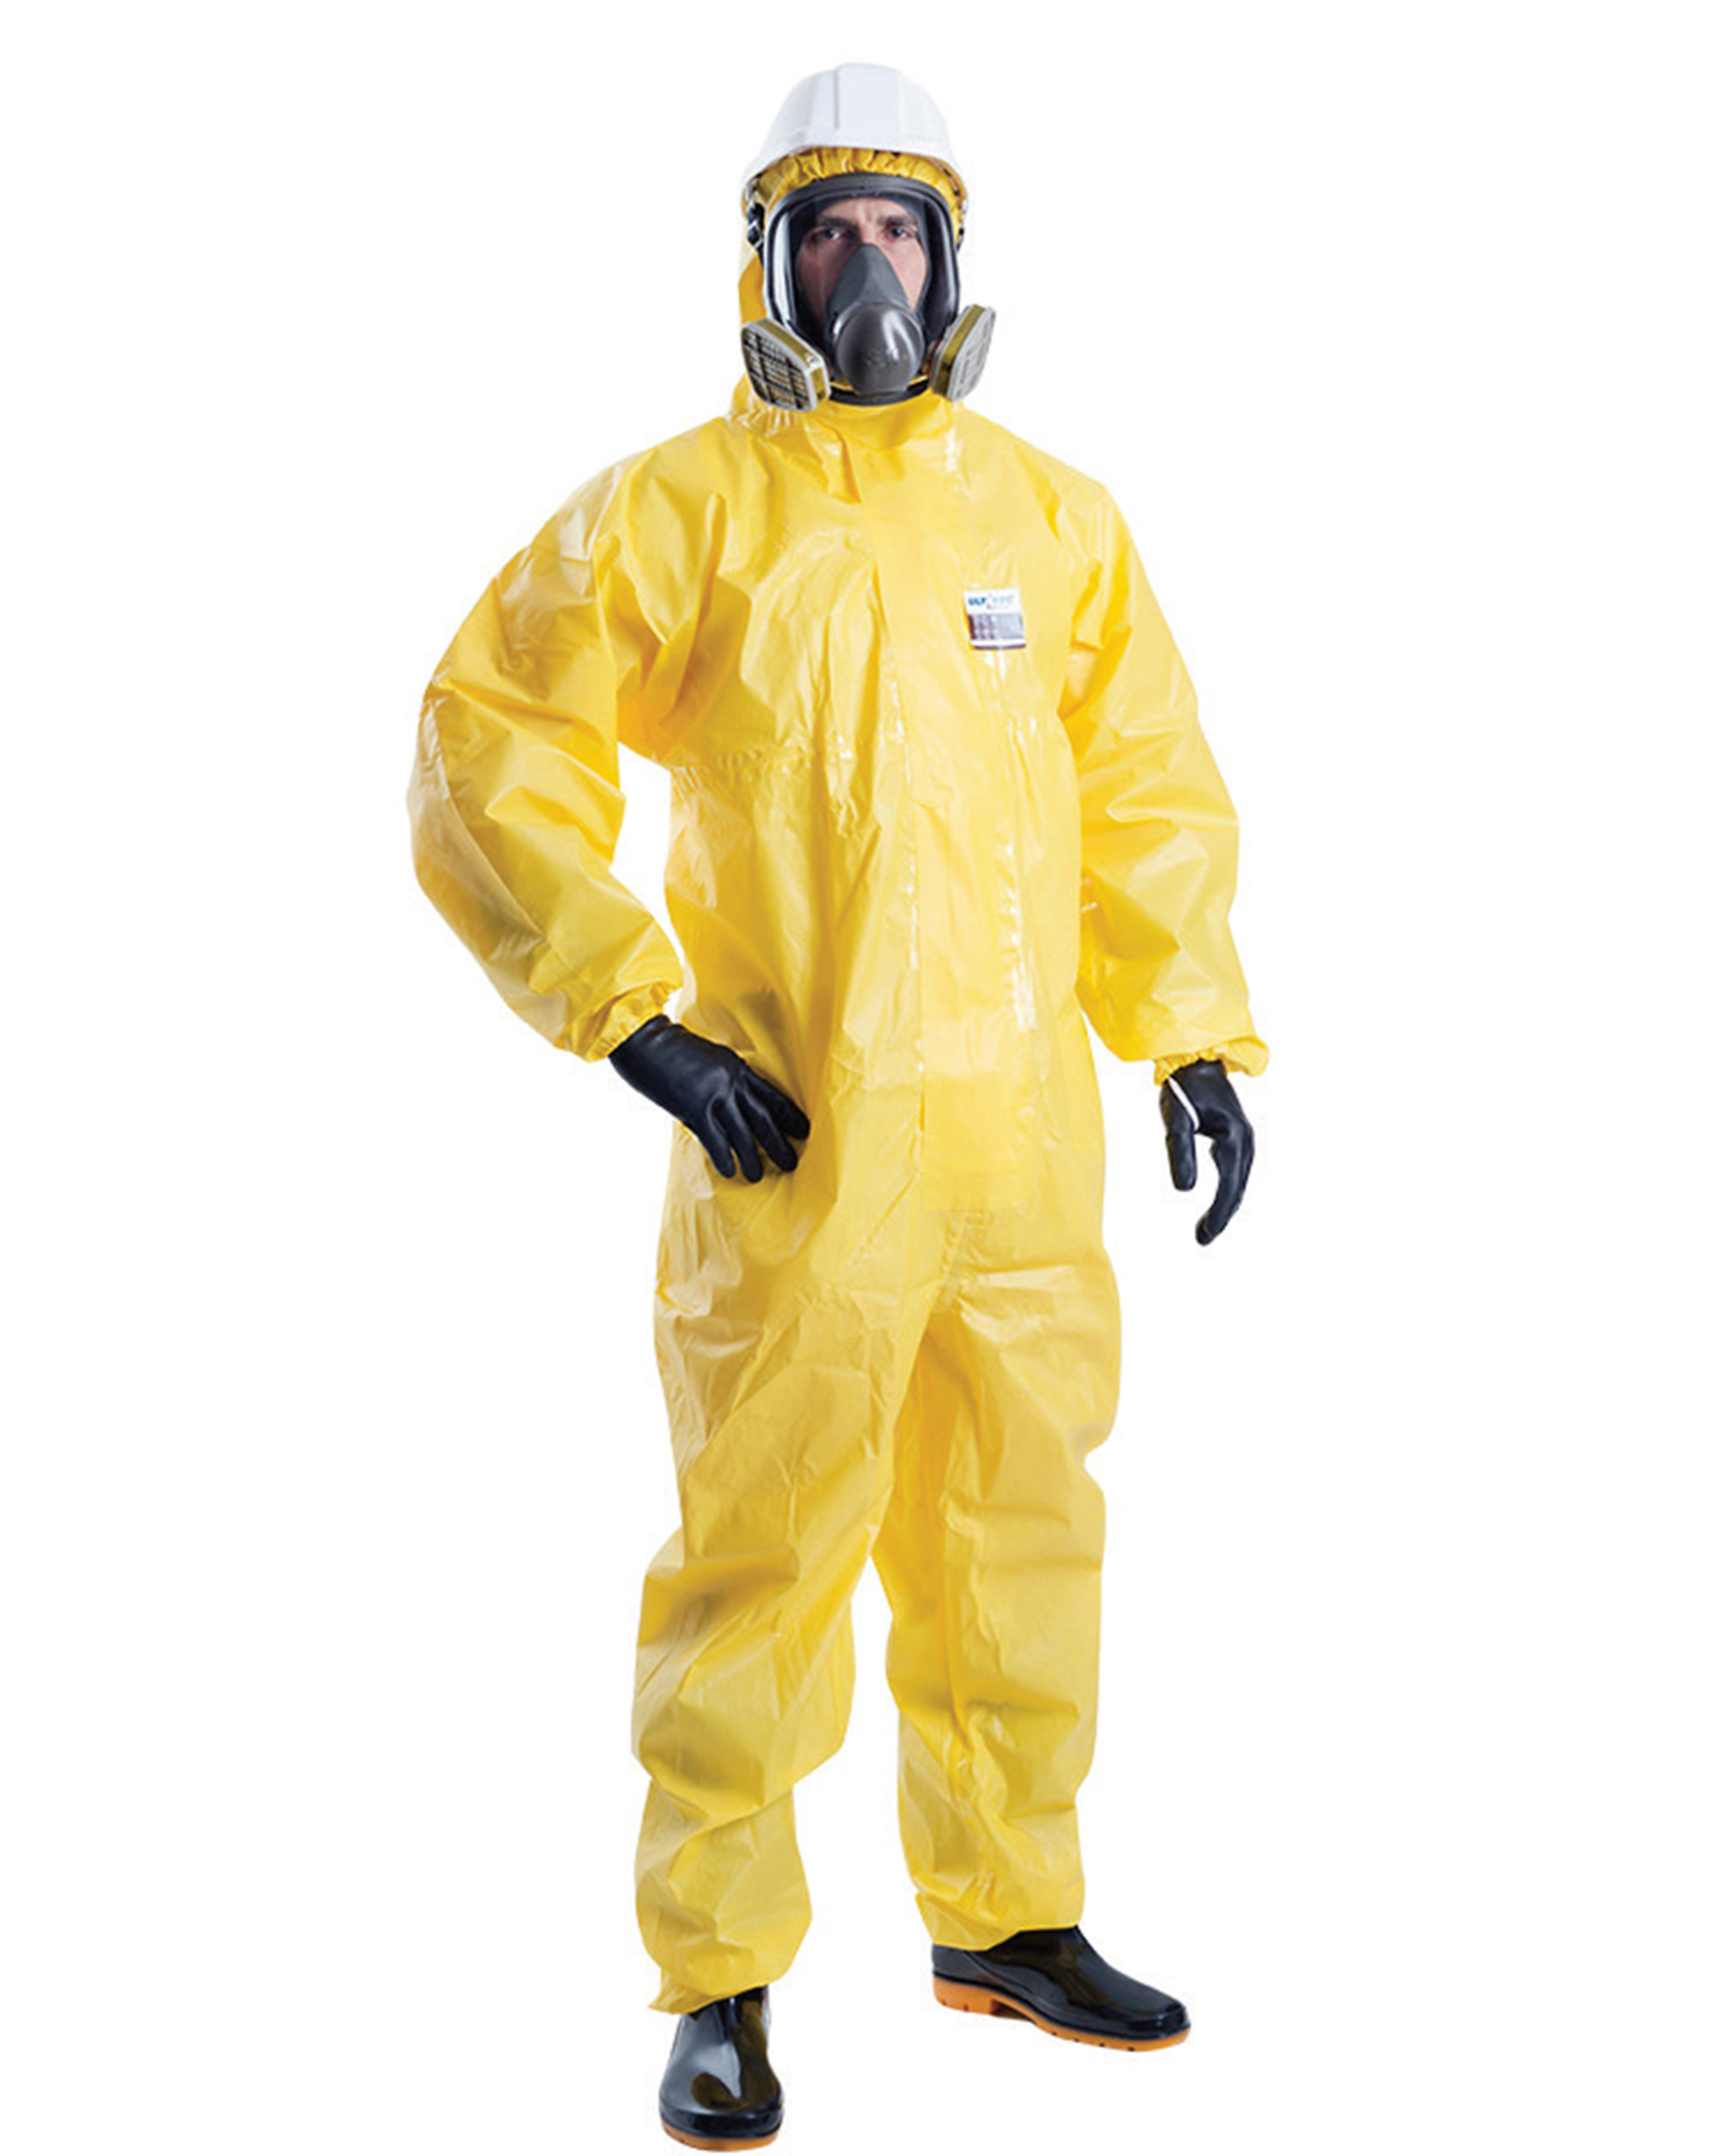 http://www.medsurgehealth.co.ke/wp-content/uploads/2014/12/Chemical-Resistant-Protective-Clothing.jpg